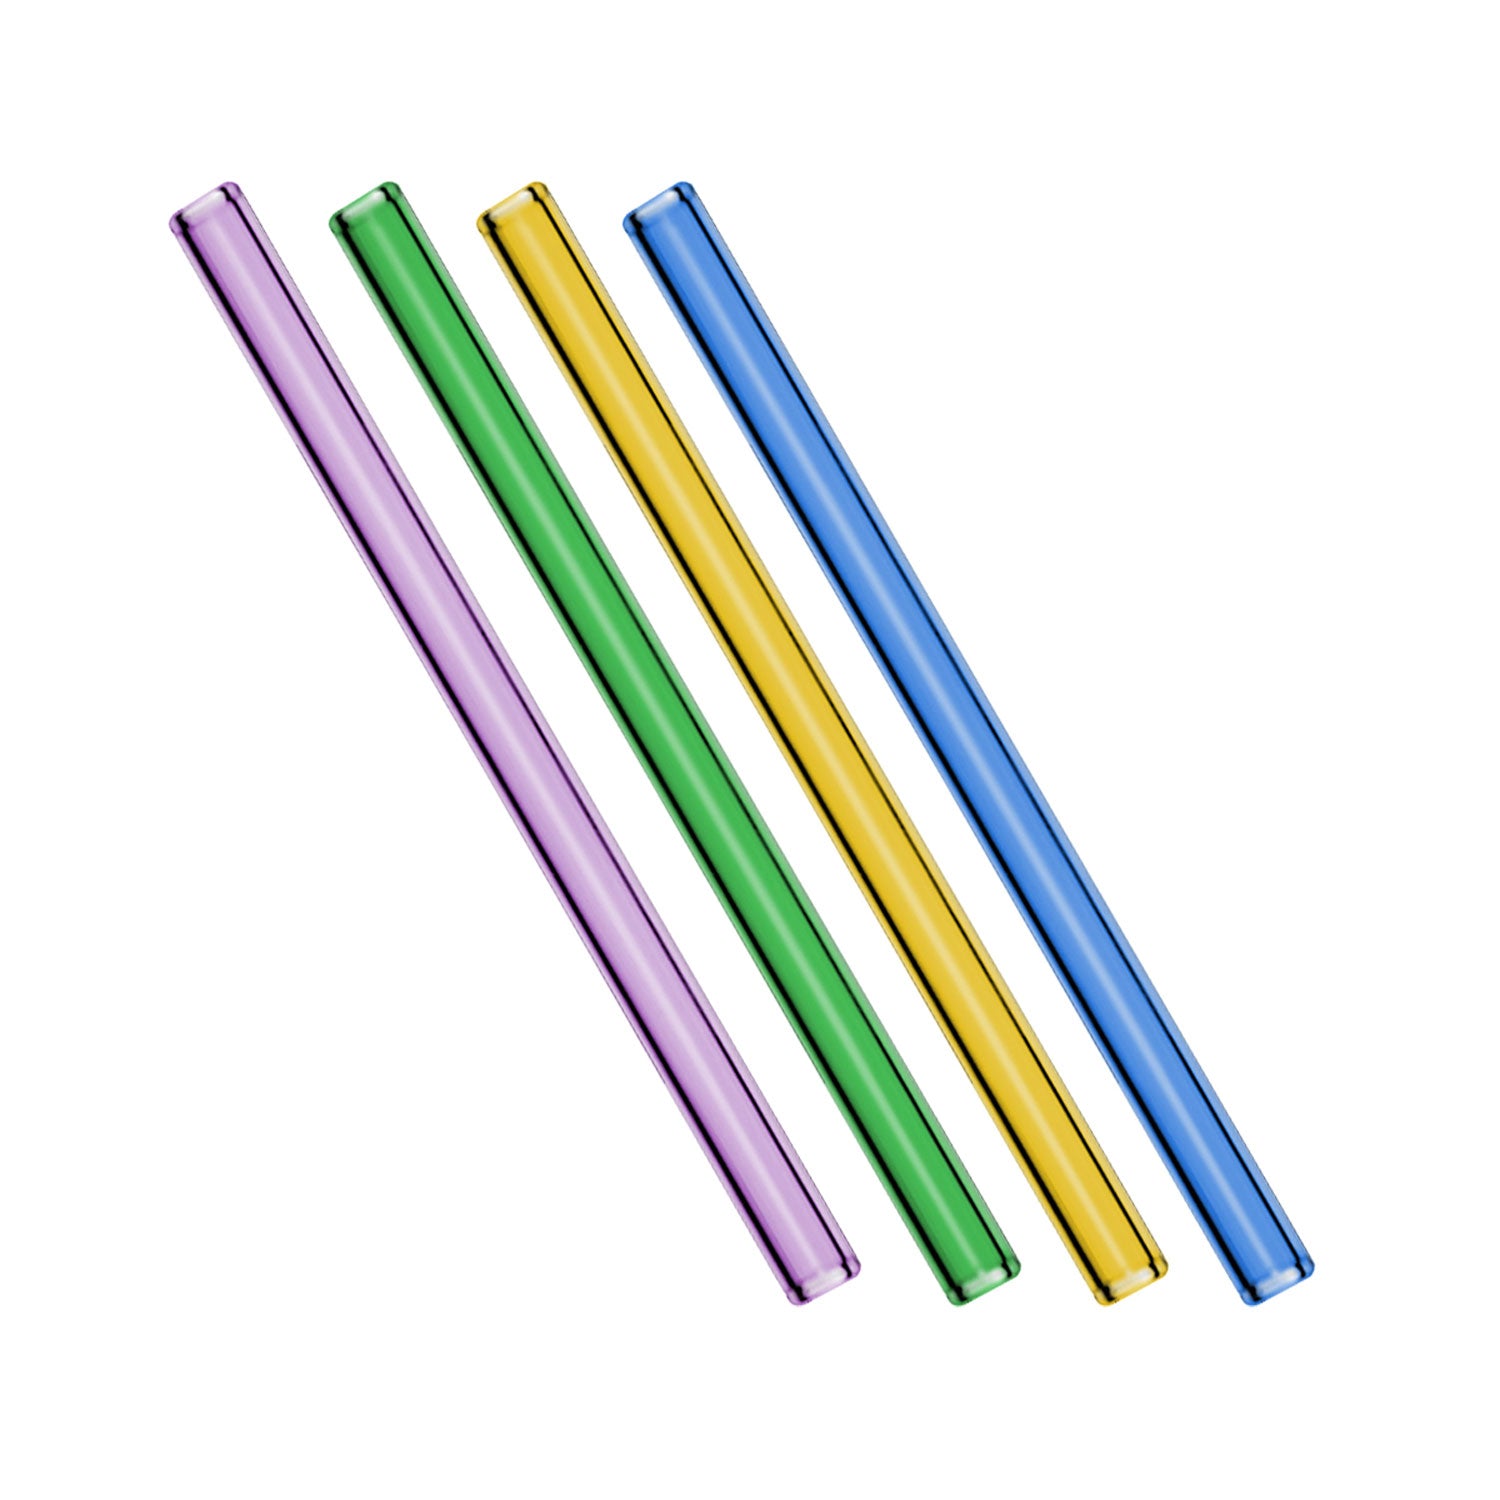 (48 stk.) Drikkestrå i glas assorterede farver - 20 cm - lige - inkl. nylonbørste til rengøring